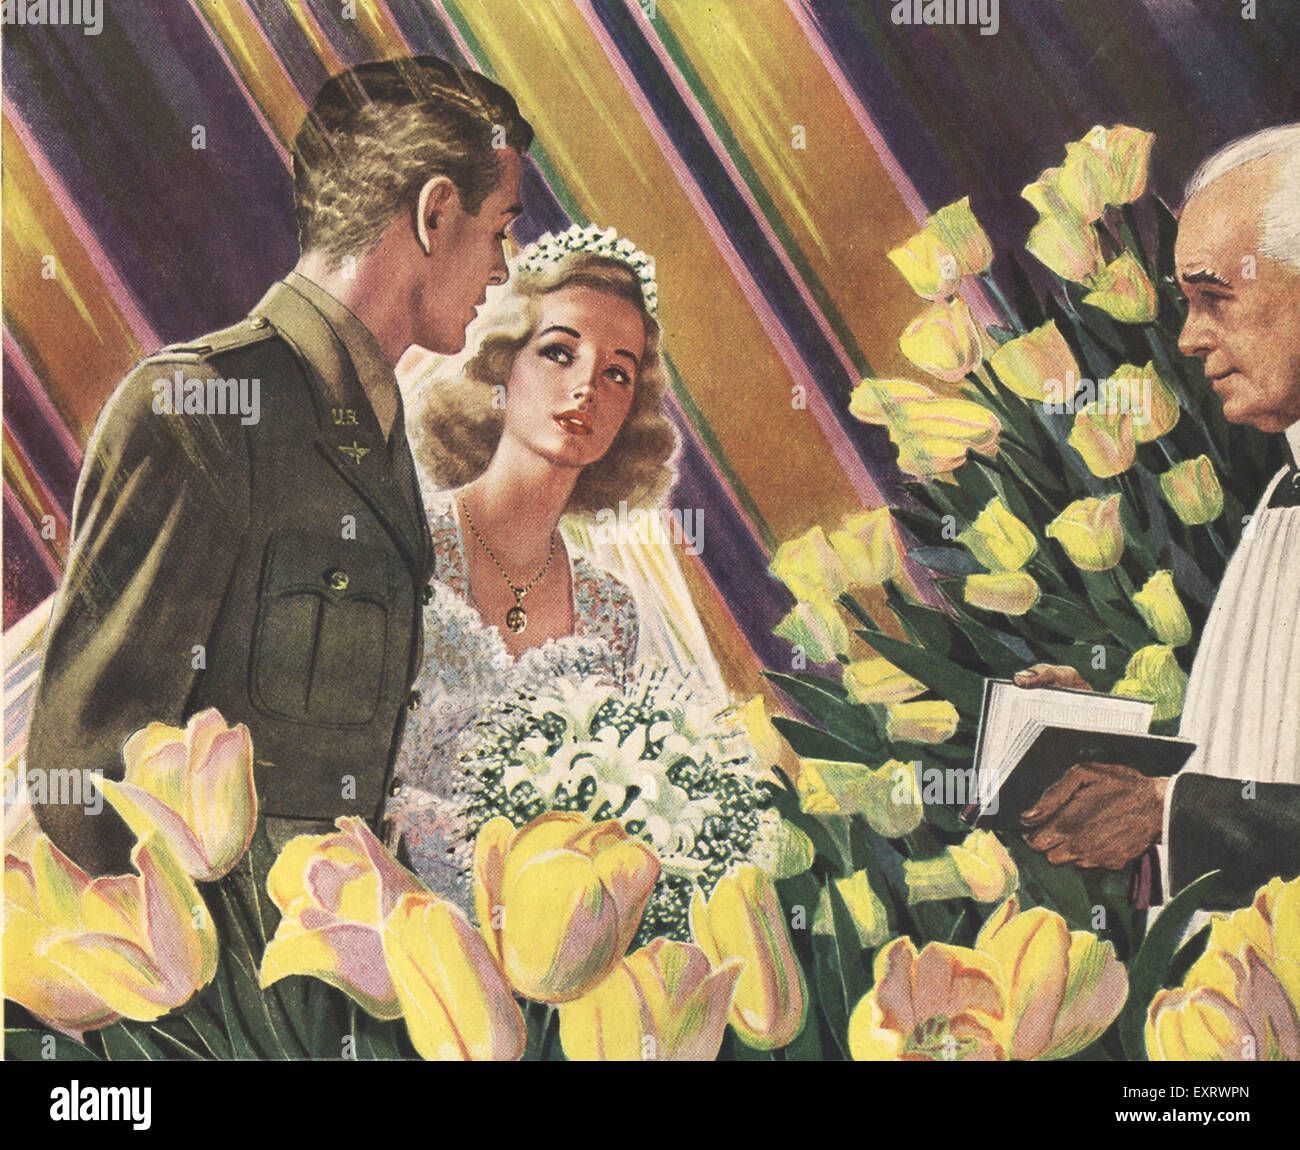 1940s USA Wedding Magazine Plate Stock Photo